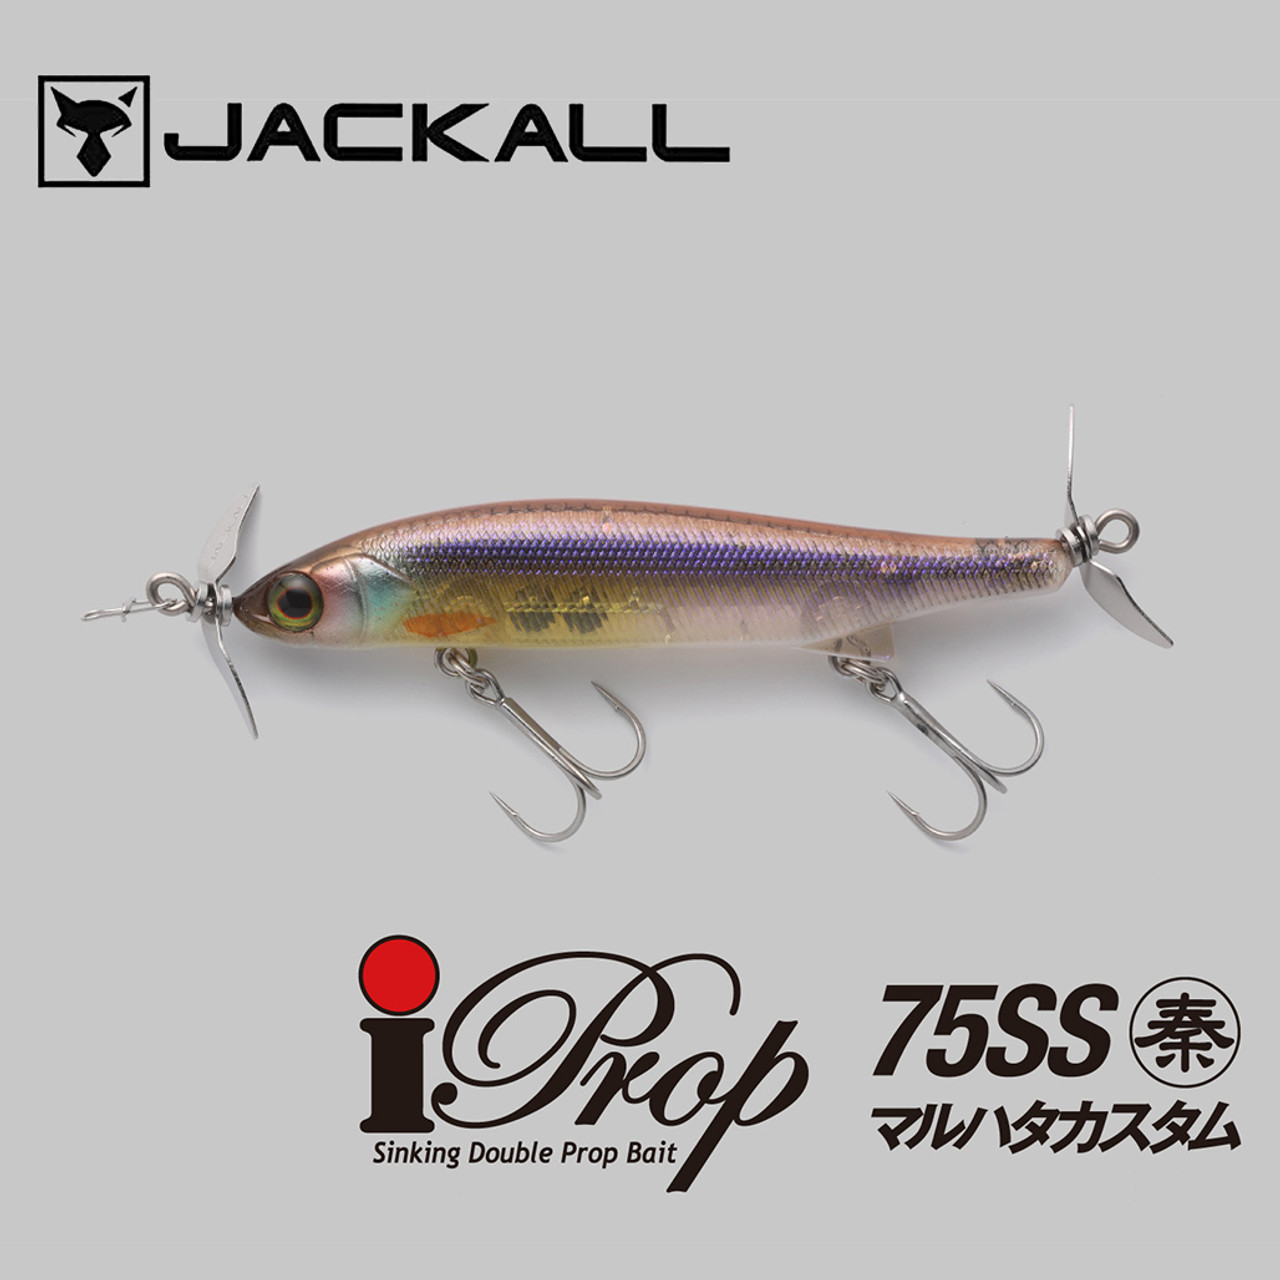 Jackall I-PROP 75SS Maruhata Custom Spybaits NEW - KKJAPANLURE